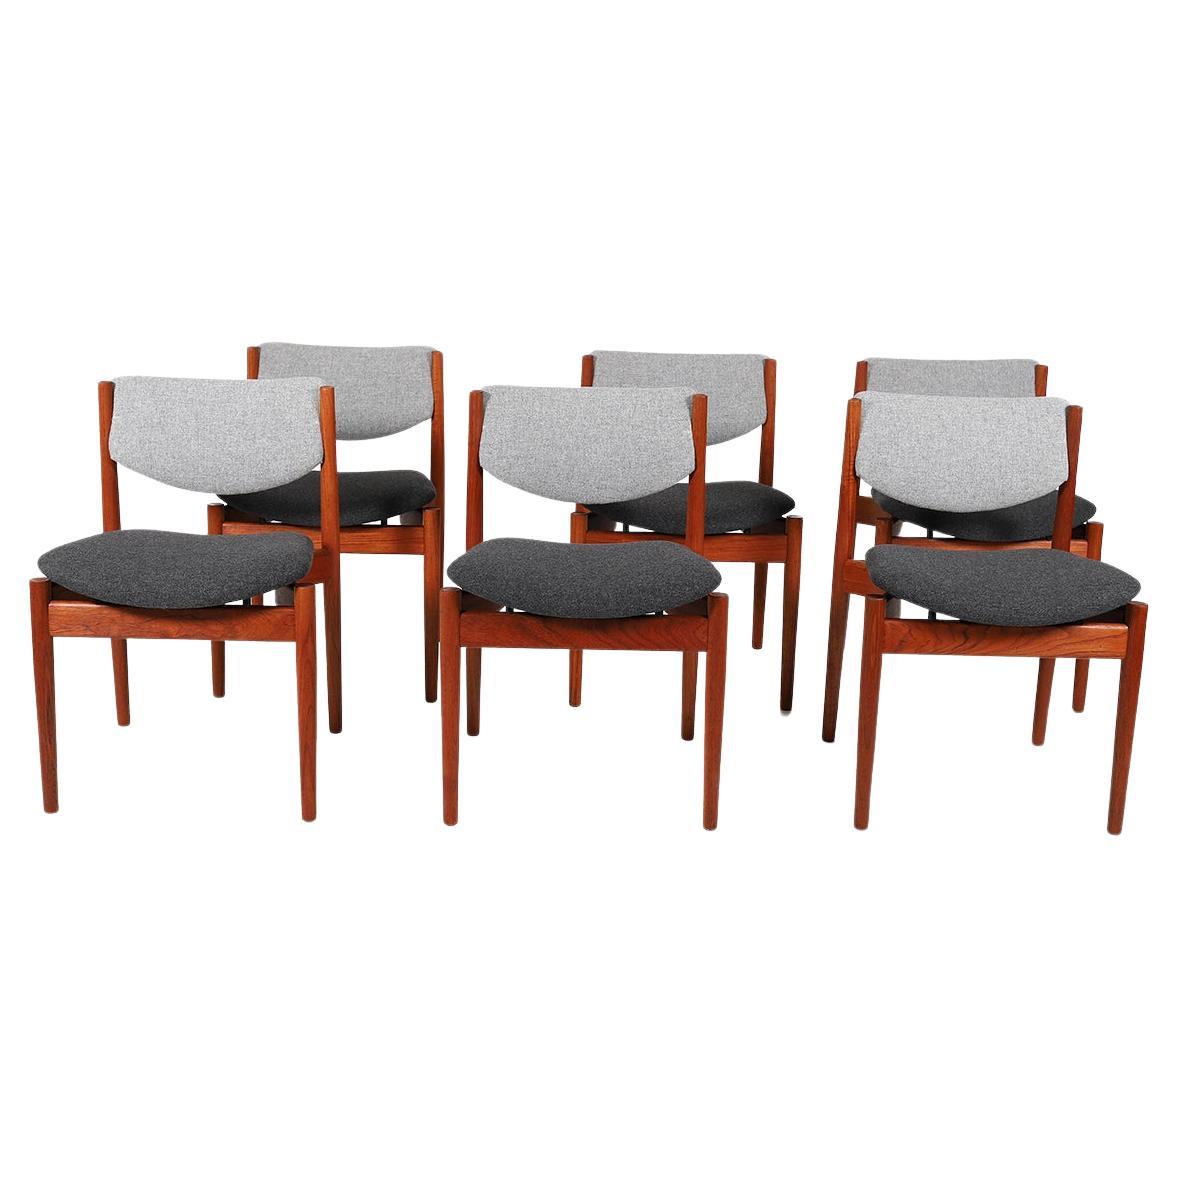 Danish Modern Teak Dining Chairs by Finn Juhl